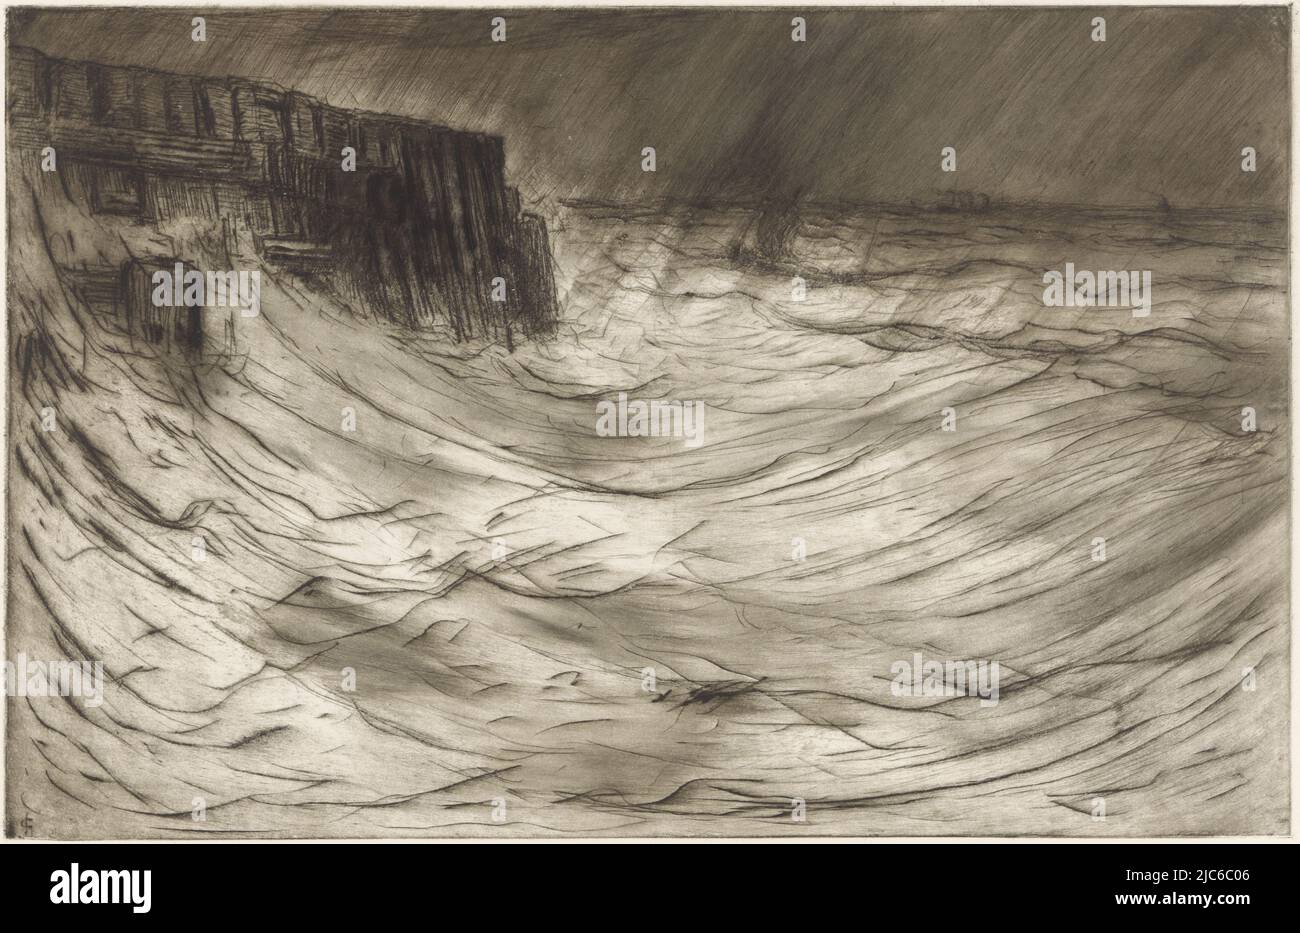 A Vlissingen pier in rain and rough seas, Vlissingen pier, print maker: Carel Nicolaas Storm van 's-Gravesande, (signed by artist), Netherlands, 1869 - 1901, paper, drypoint, h 348 mm × w 532 mm Stock Photo